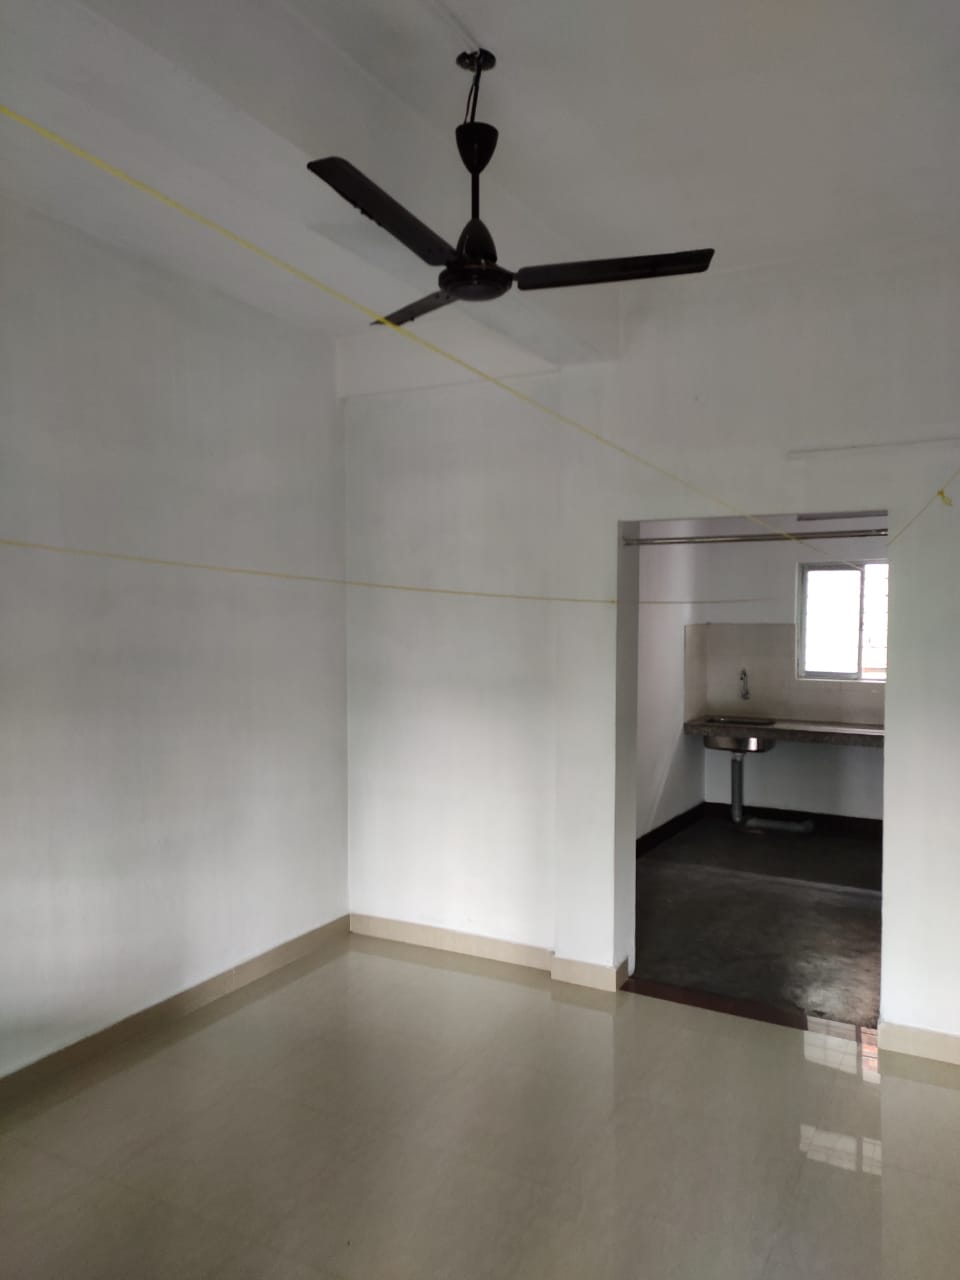 1 bhk rent house at panchali Dibrugarh under 7k